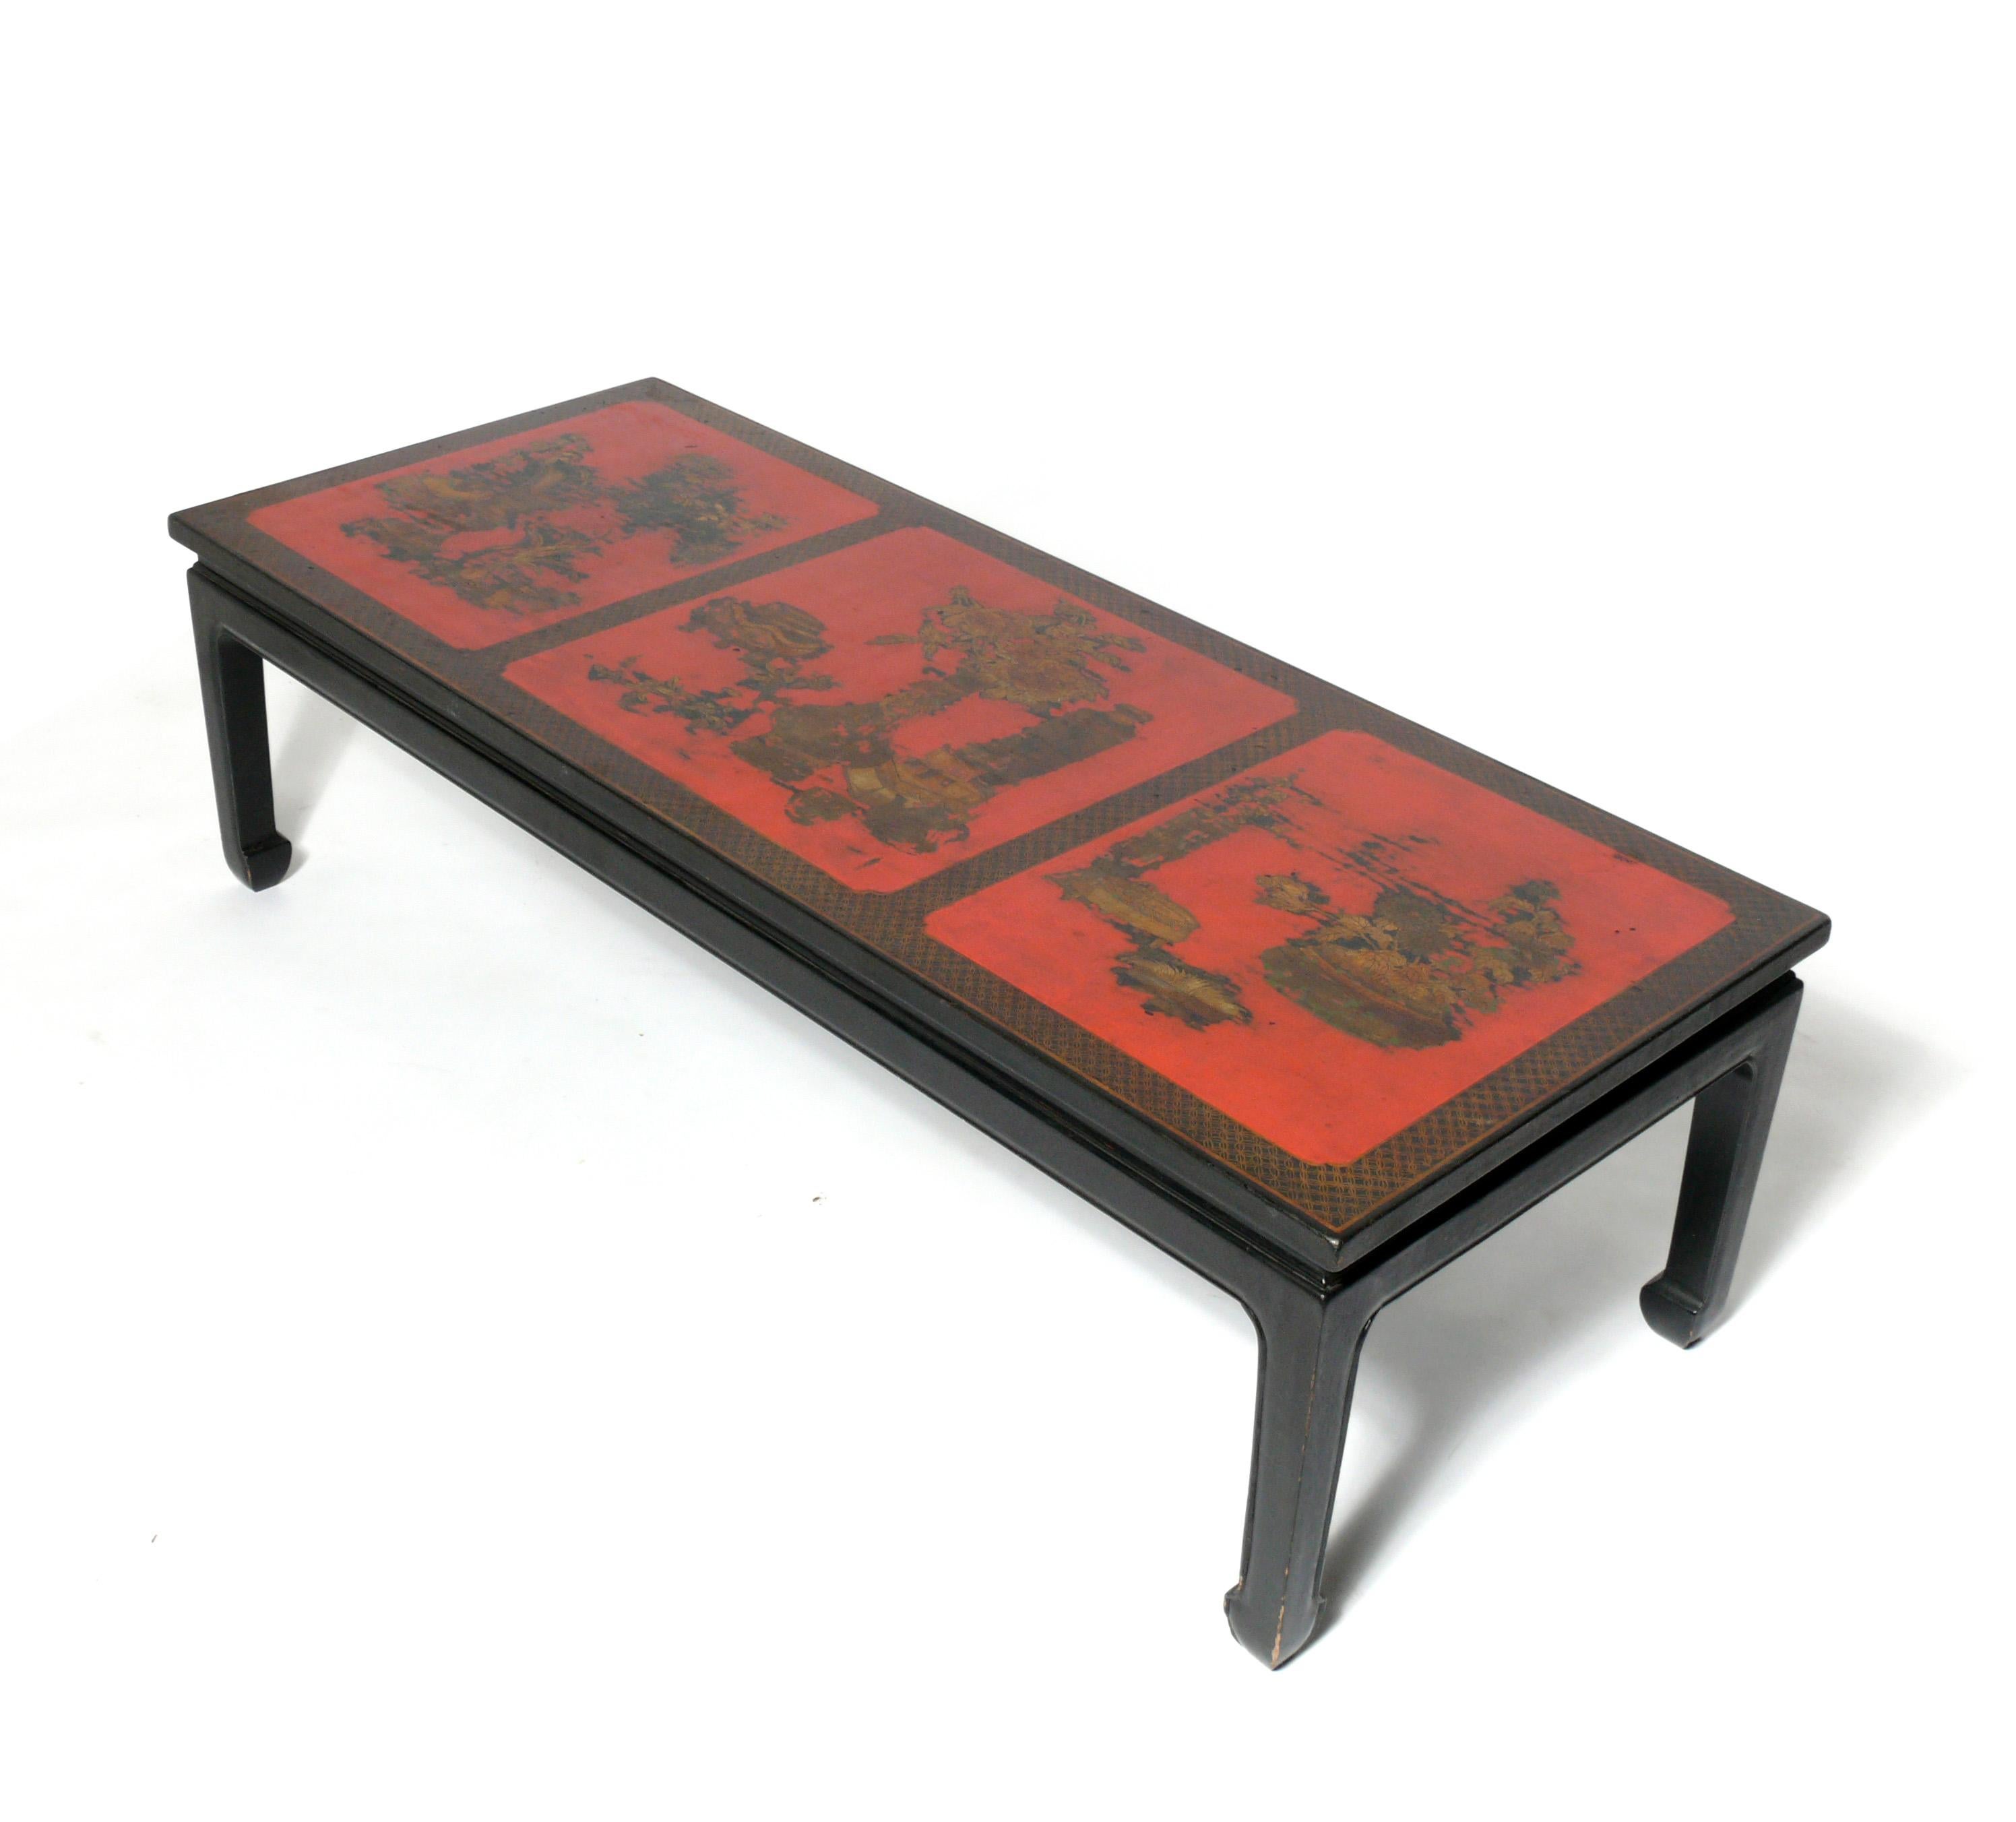 Elegant Chinoiserie coffee table, China, circa 1950s. Retains wonderful original patina.